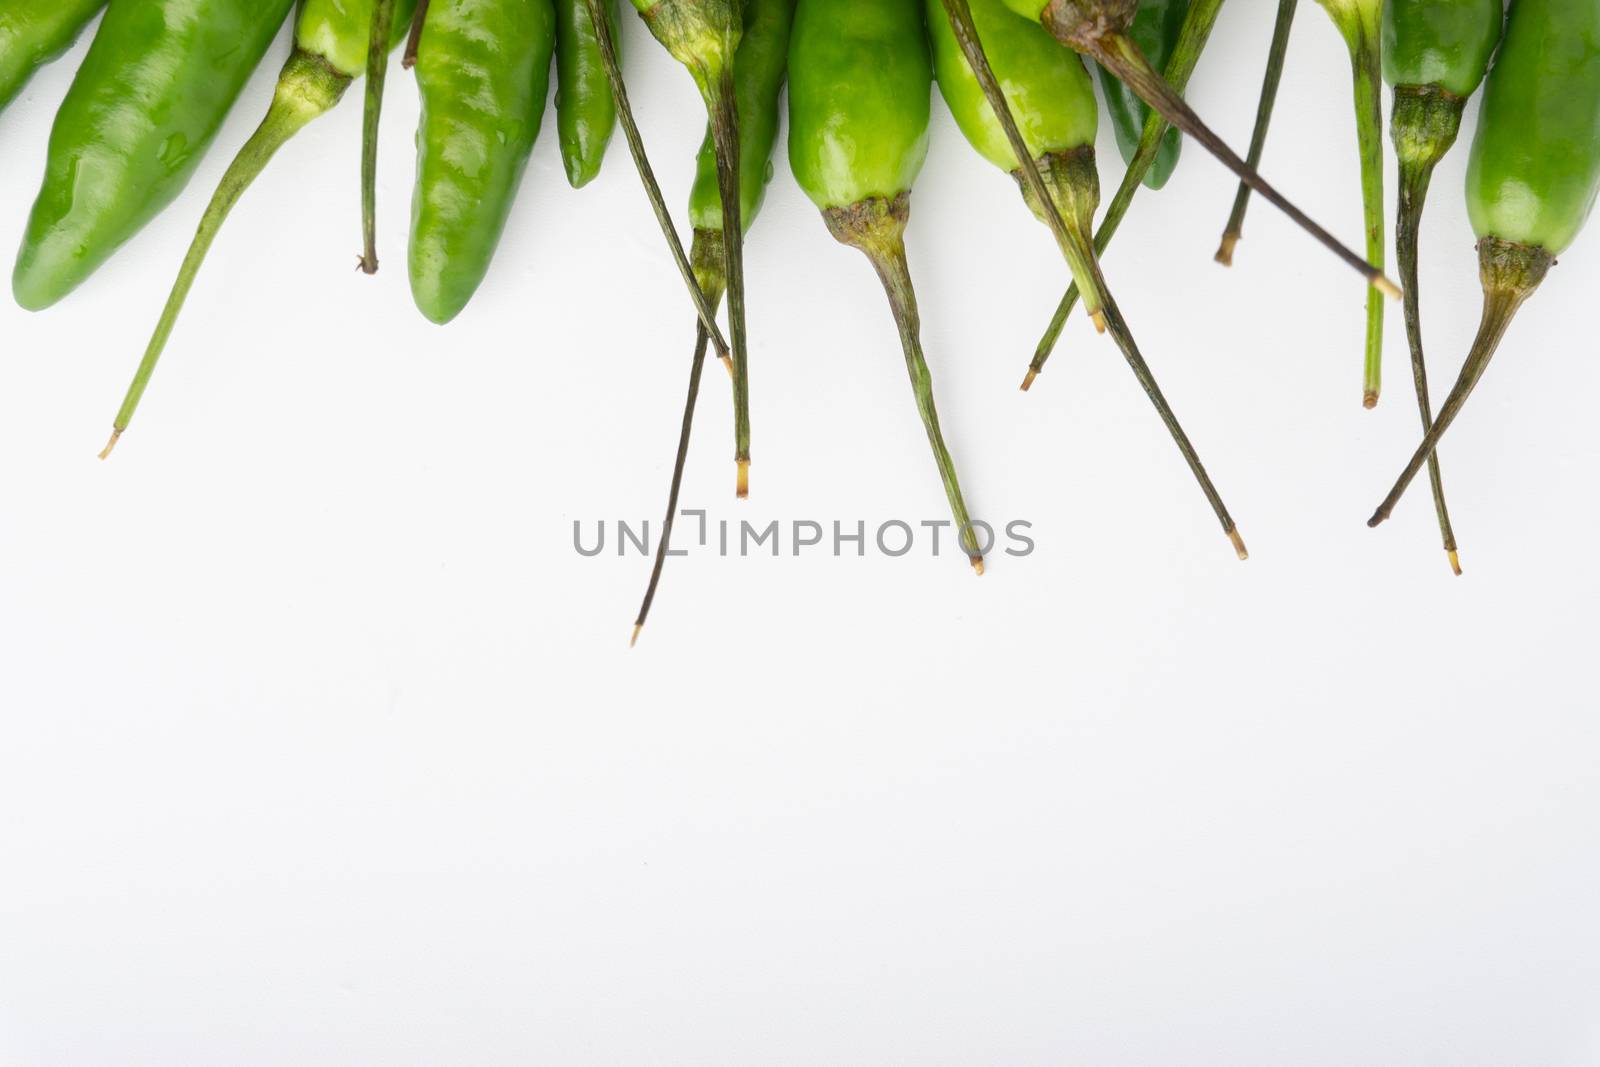 Green BirdÕs eye chili,Thai Chili pepper ,bird chili pepper nature isolate on white background. Selective focus and crop fragment